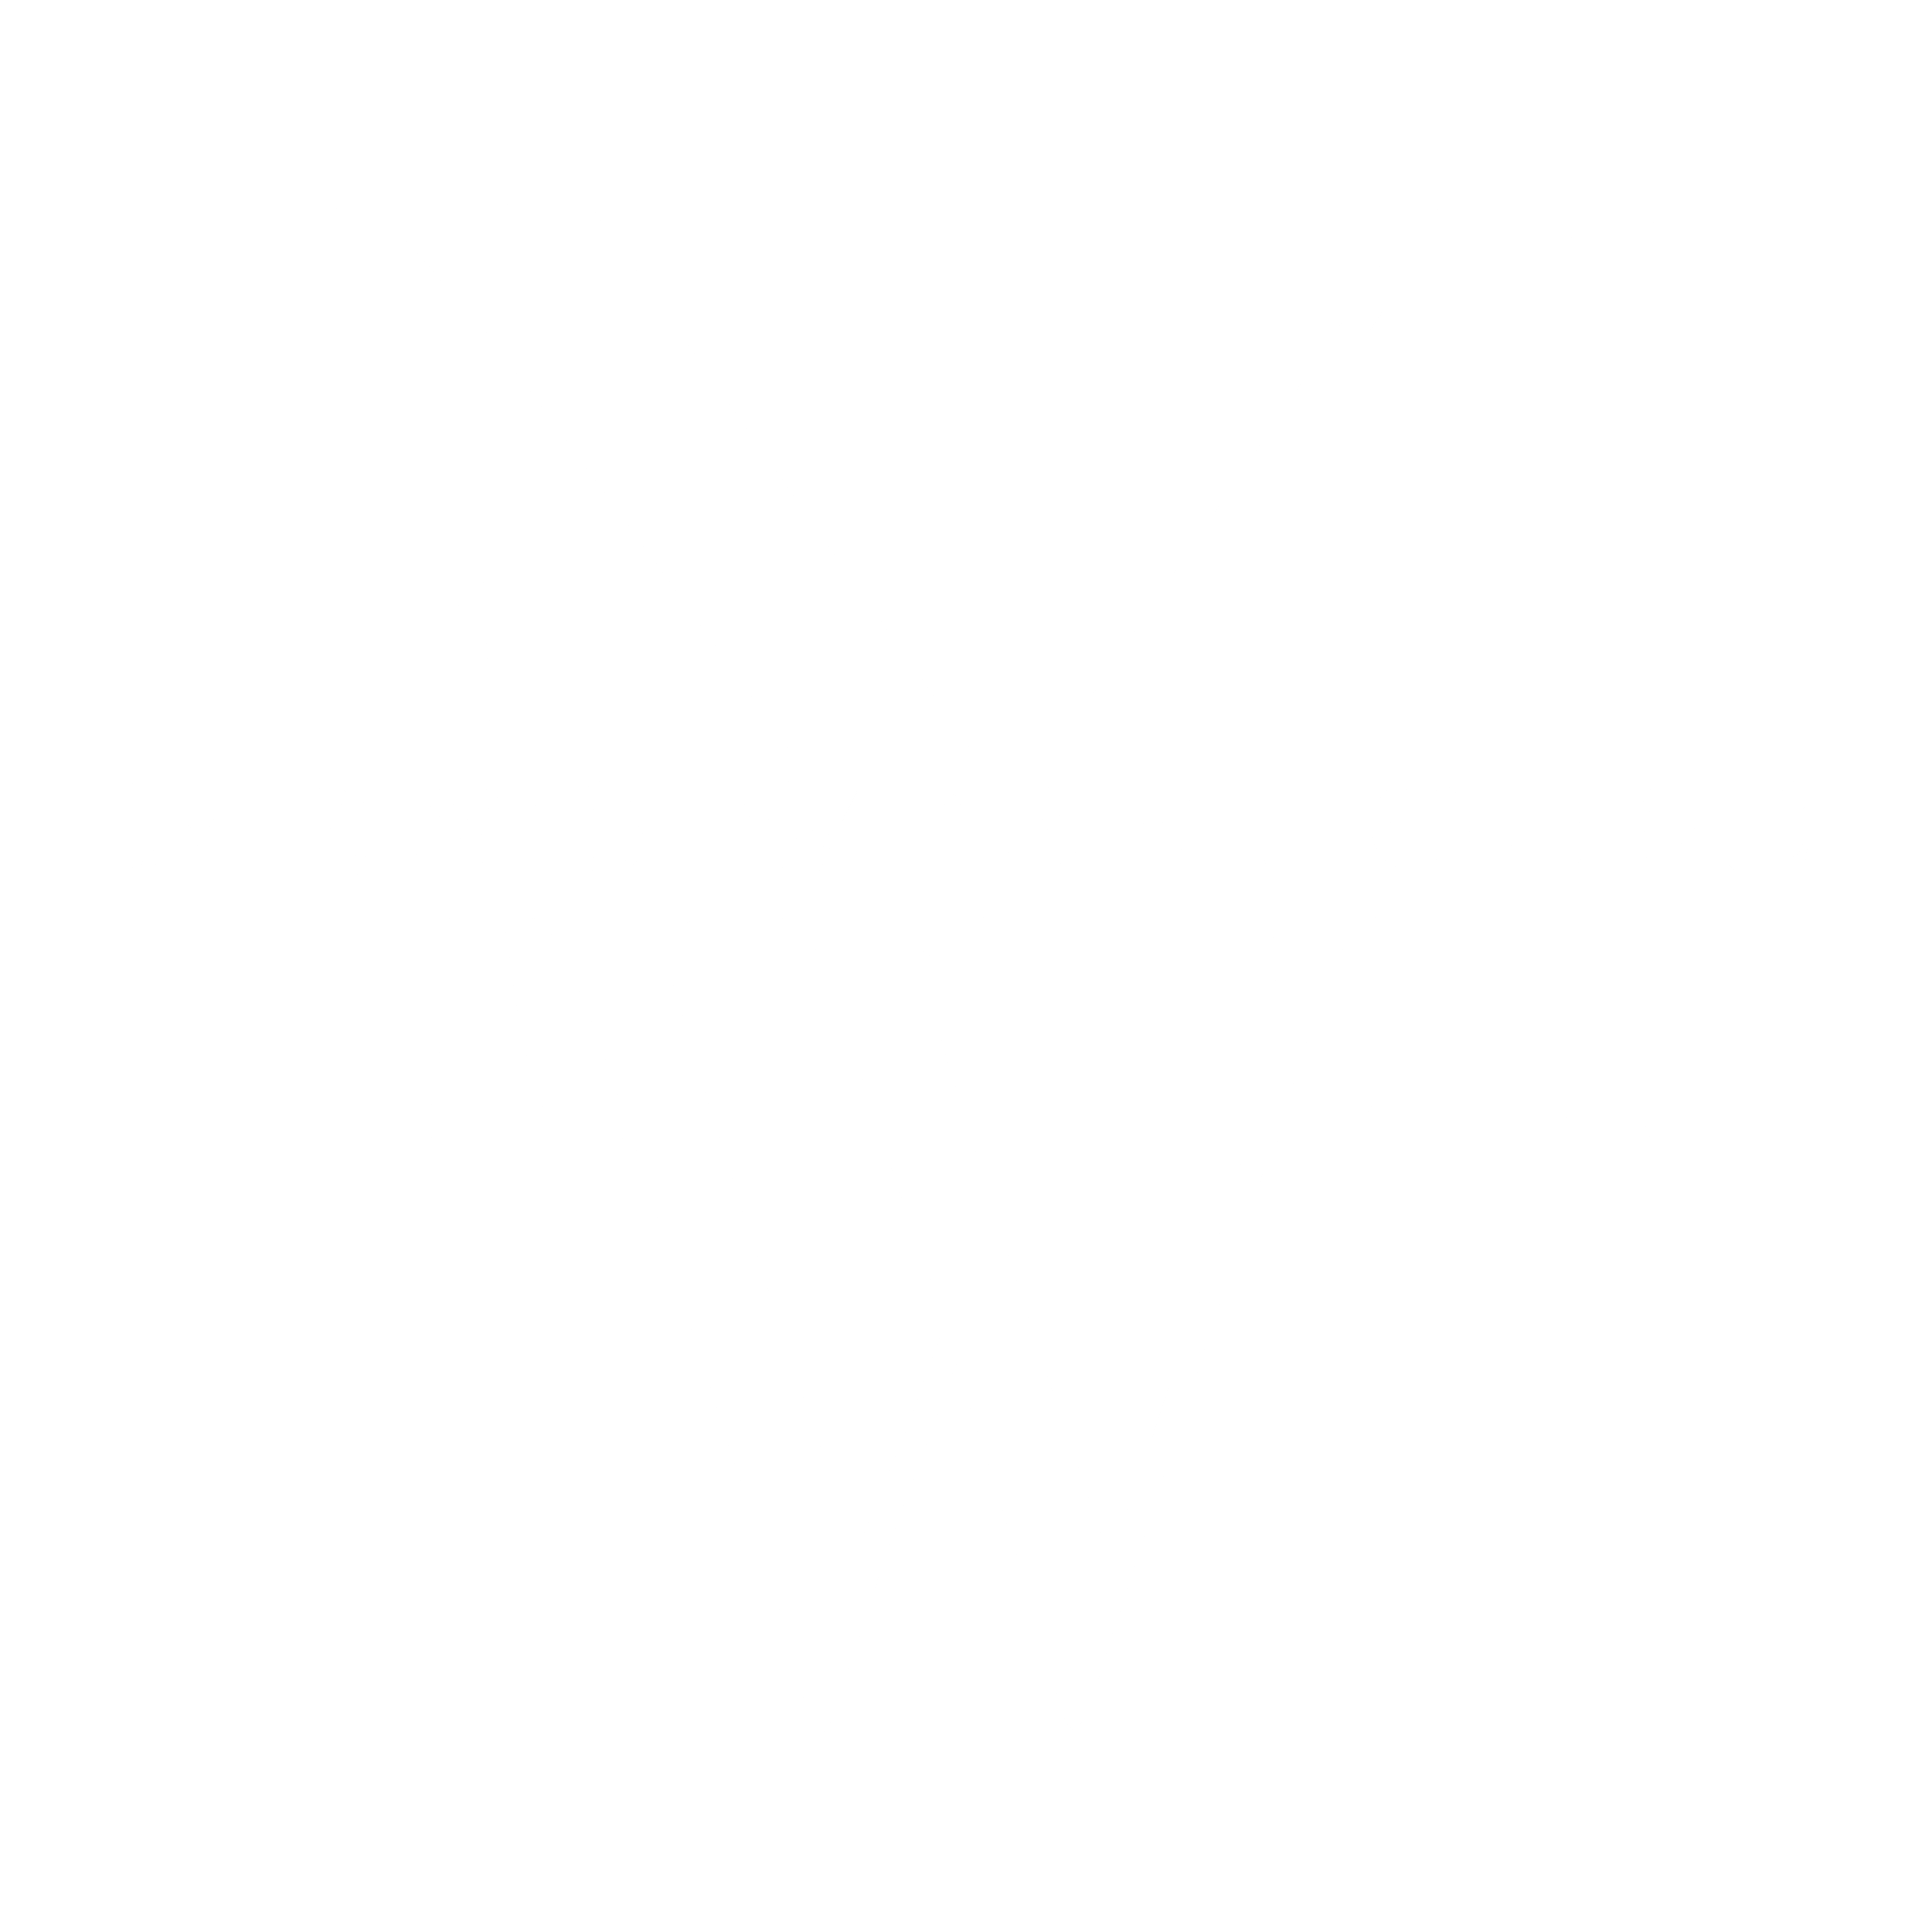 Men's Wearhouse Logo - Men's Wearhouse Logo PNG Transparent & SVG Vector - Freebie Supply